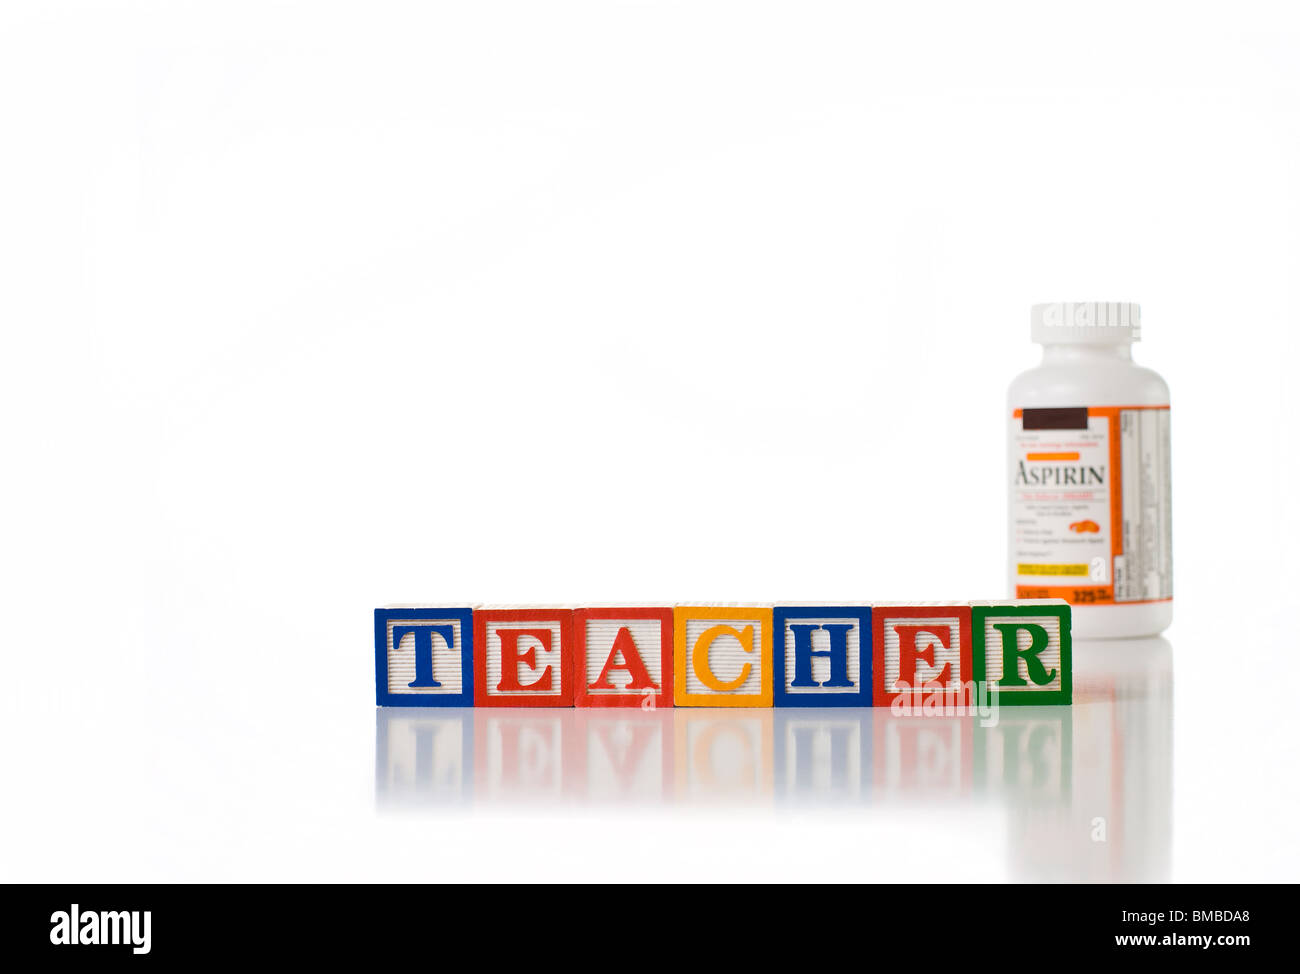 Colorful children's blocks spelling TEACHER with a bottle of aspirin Stock Photo